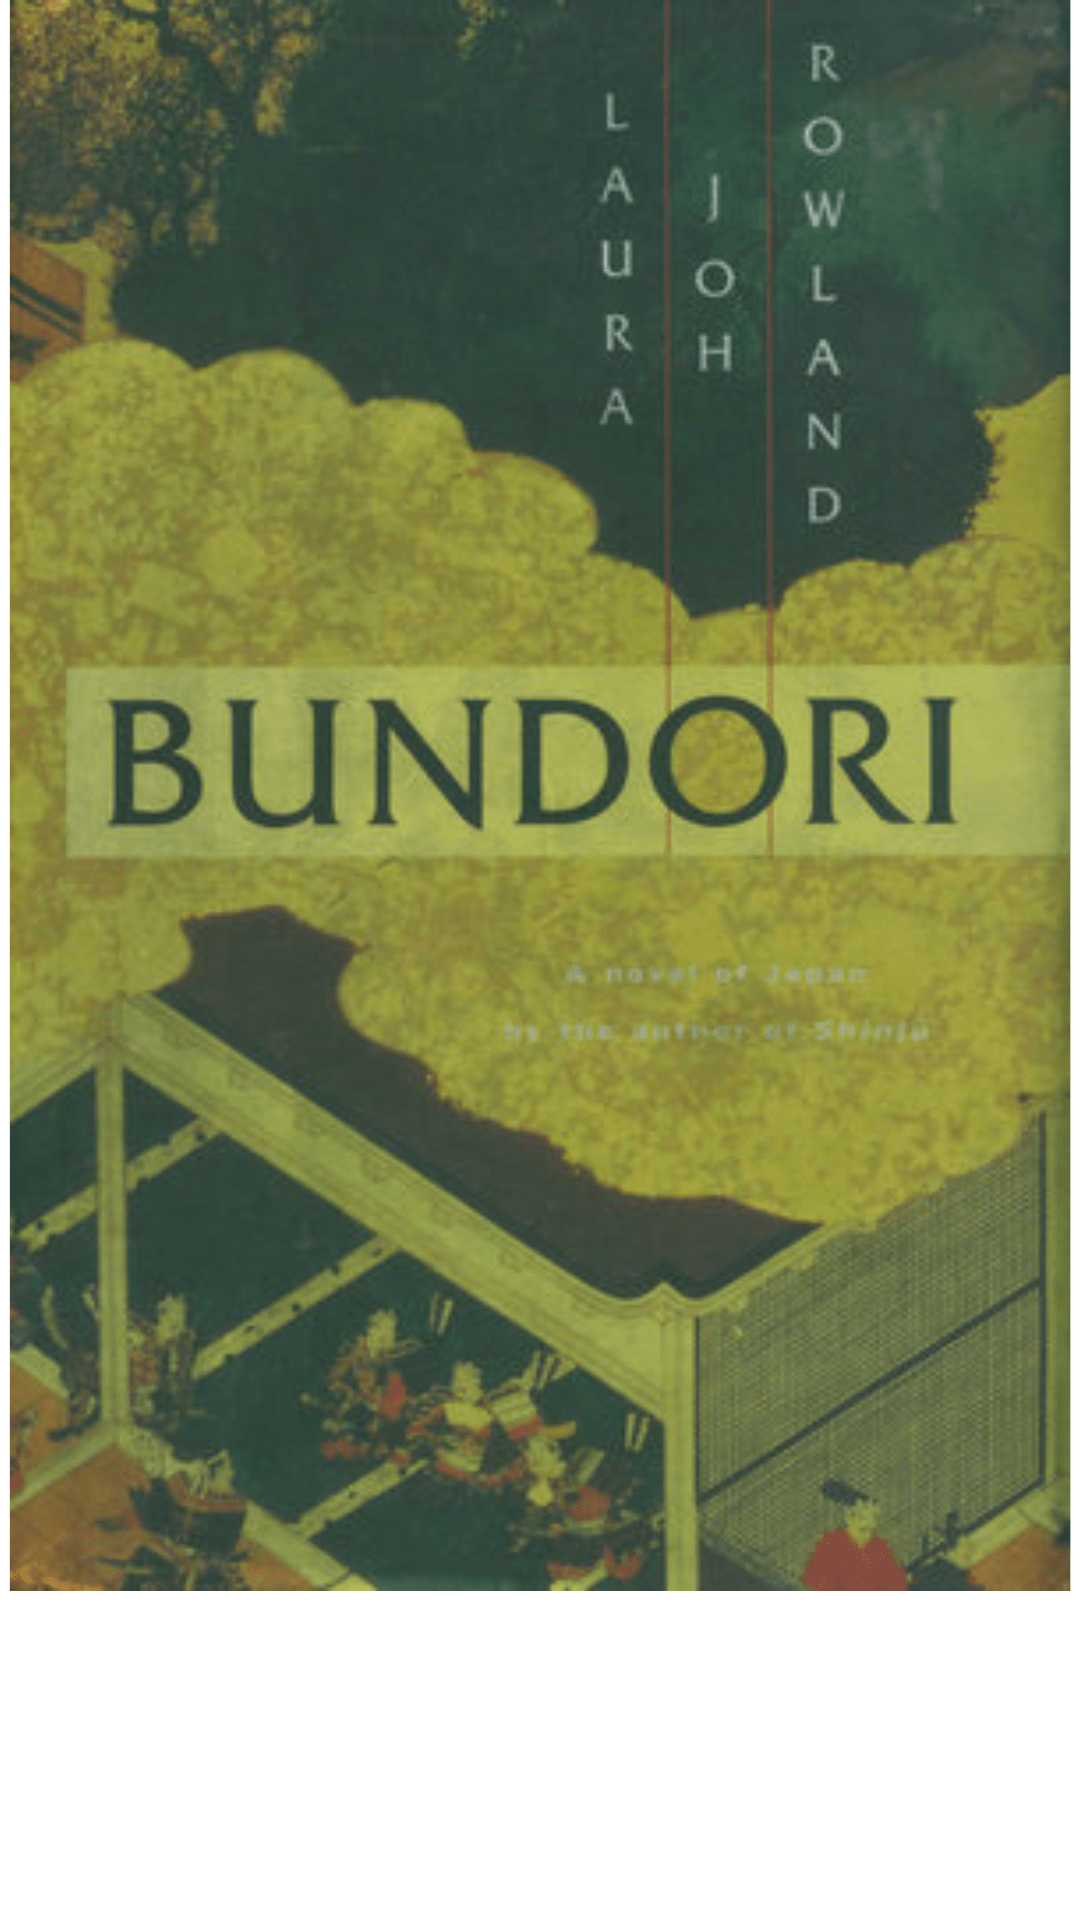 Bundori by Laura Joh Rowland